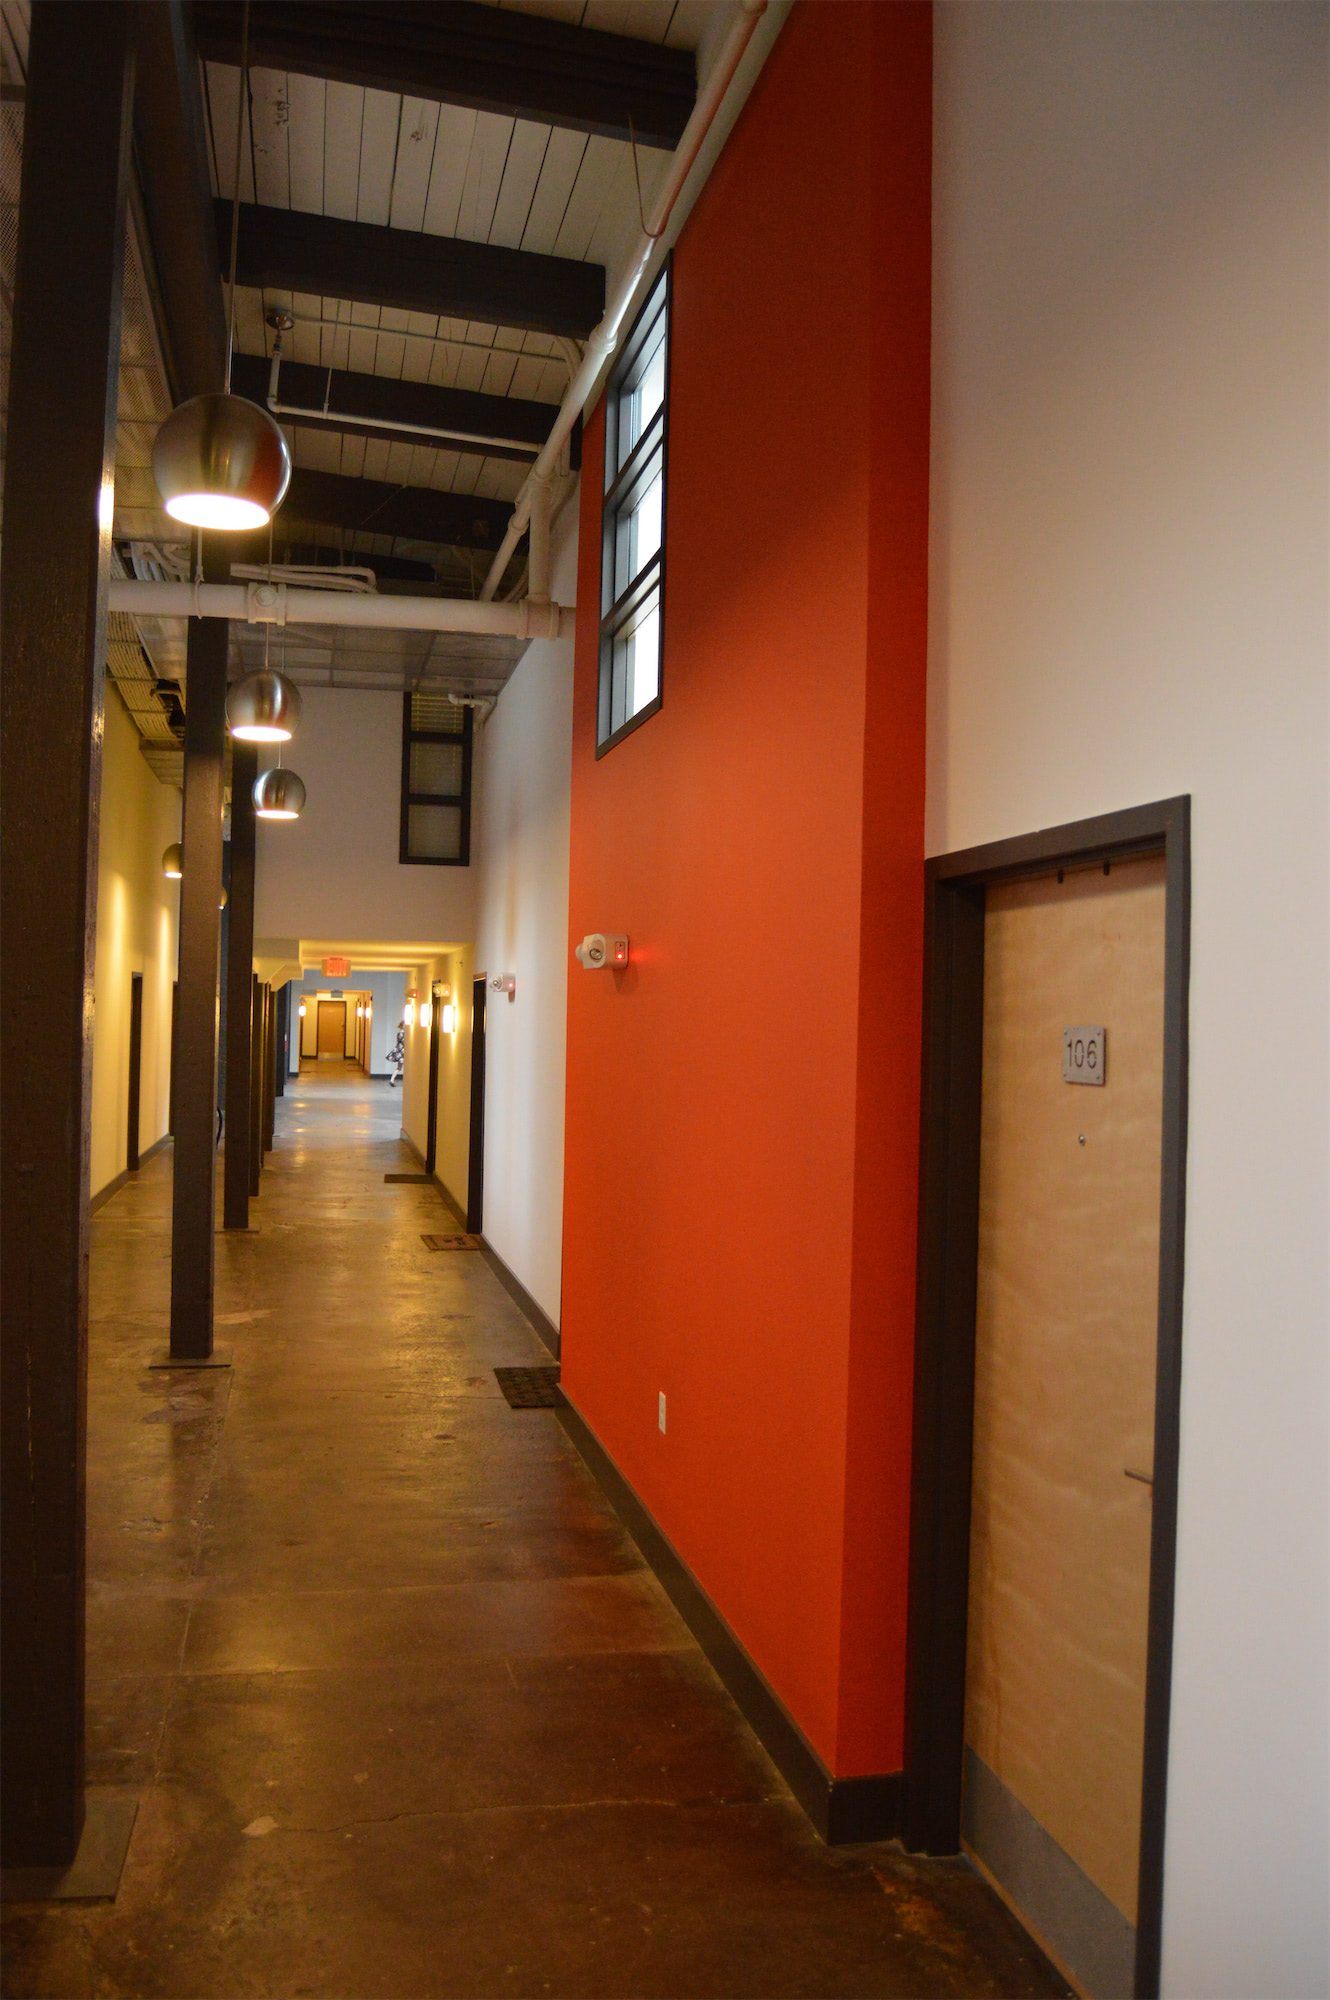 Interior storage area and conference room door